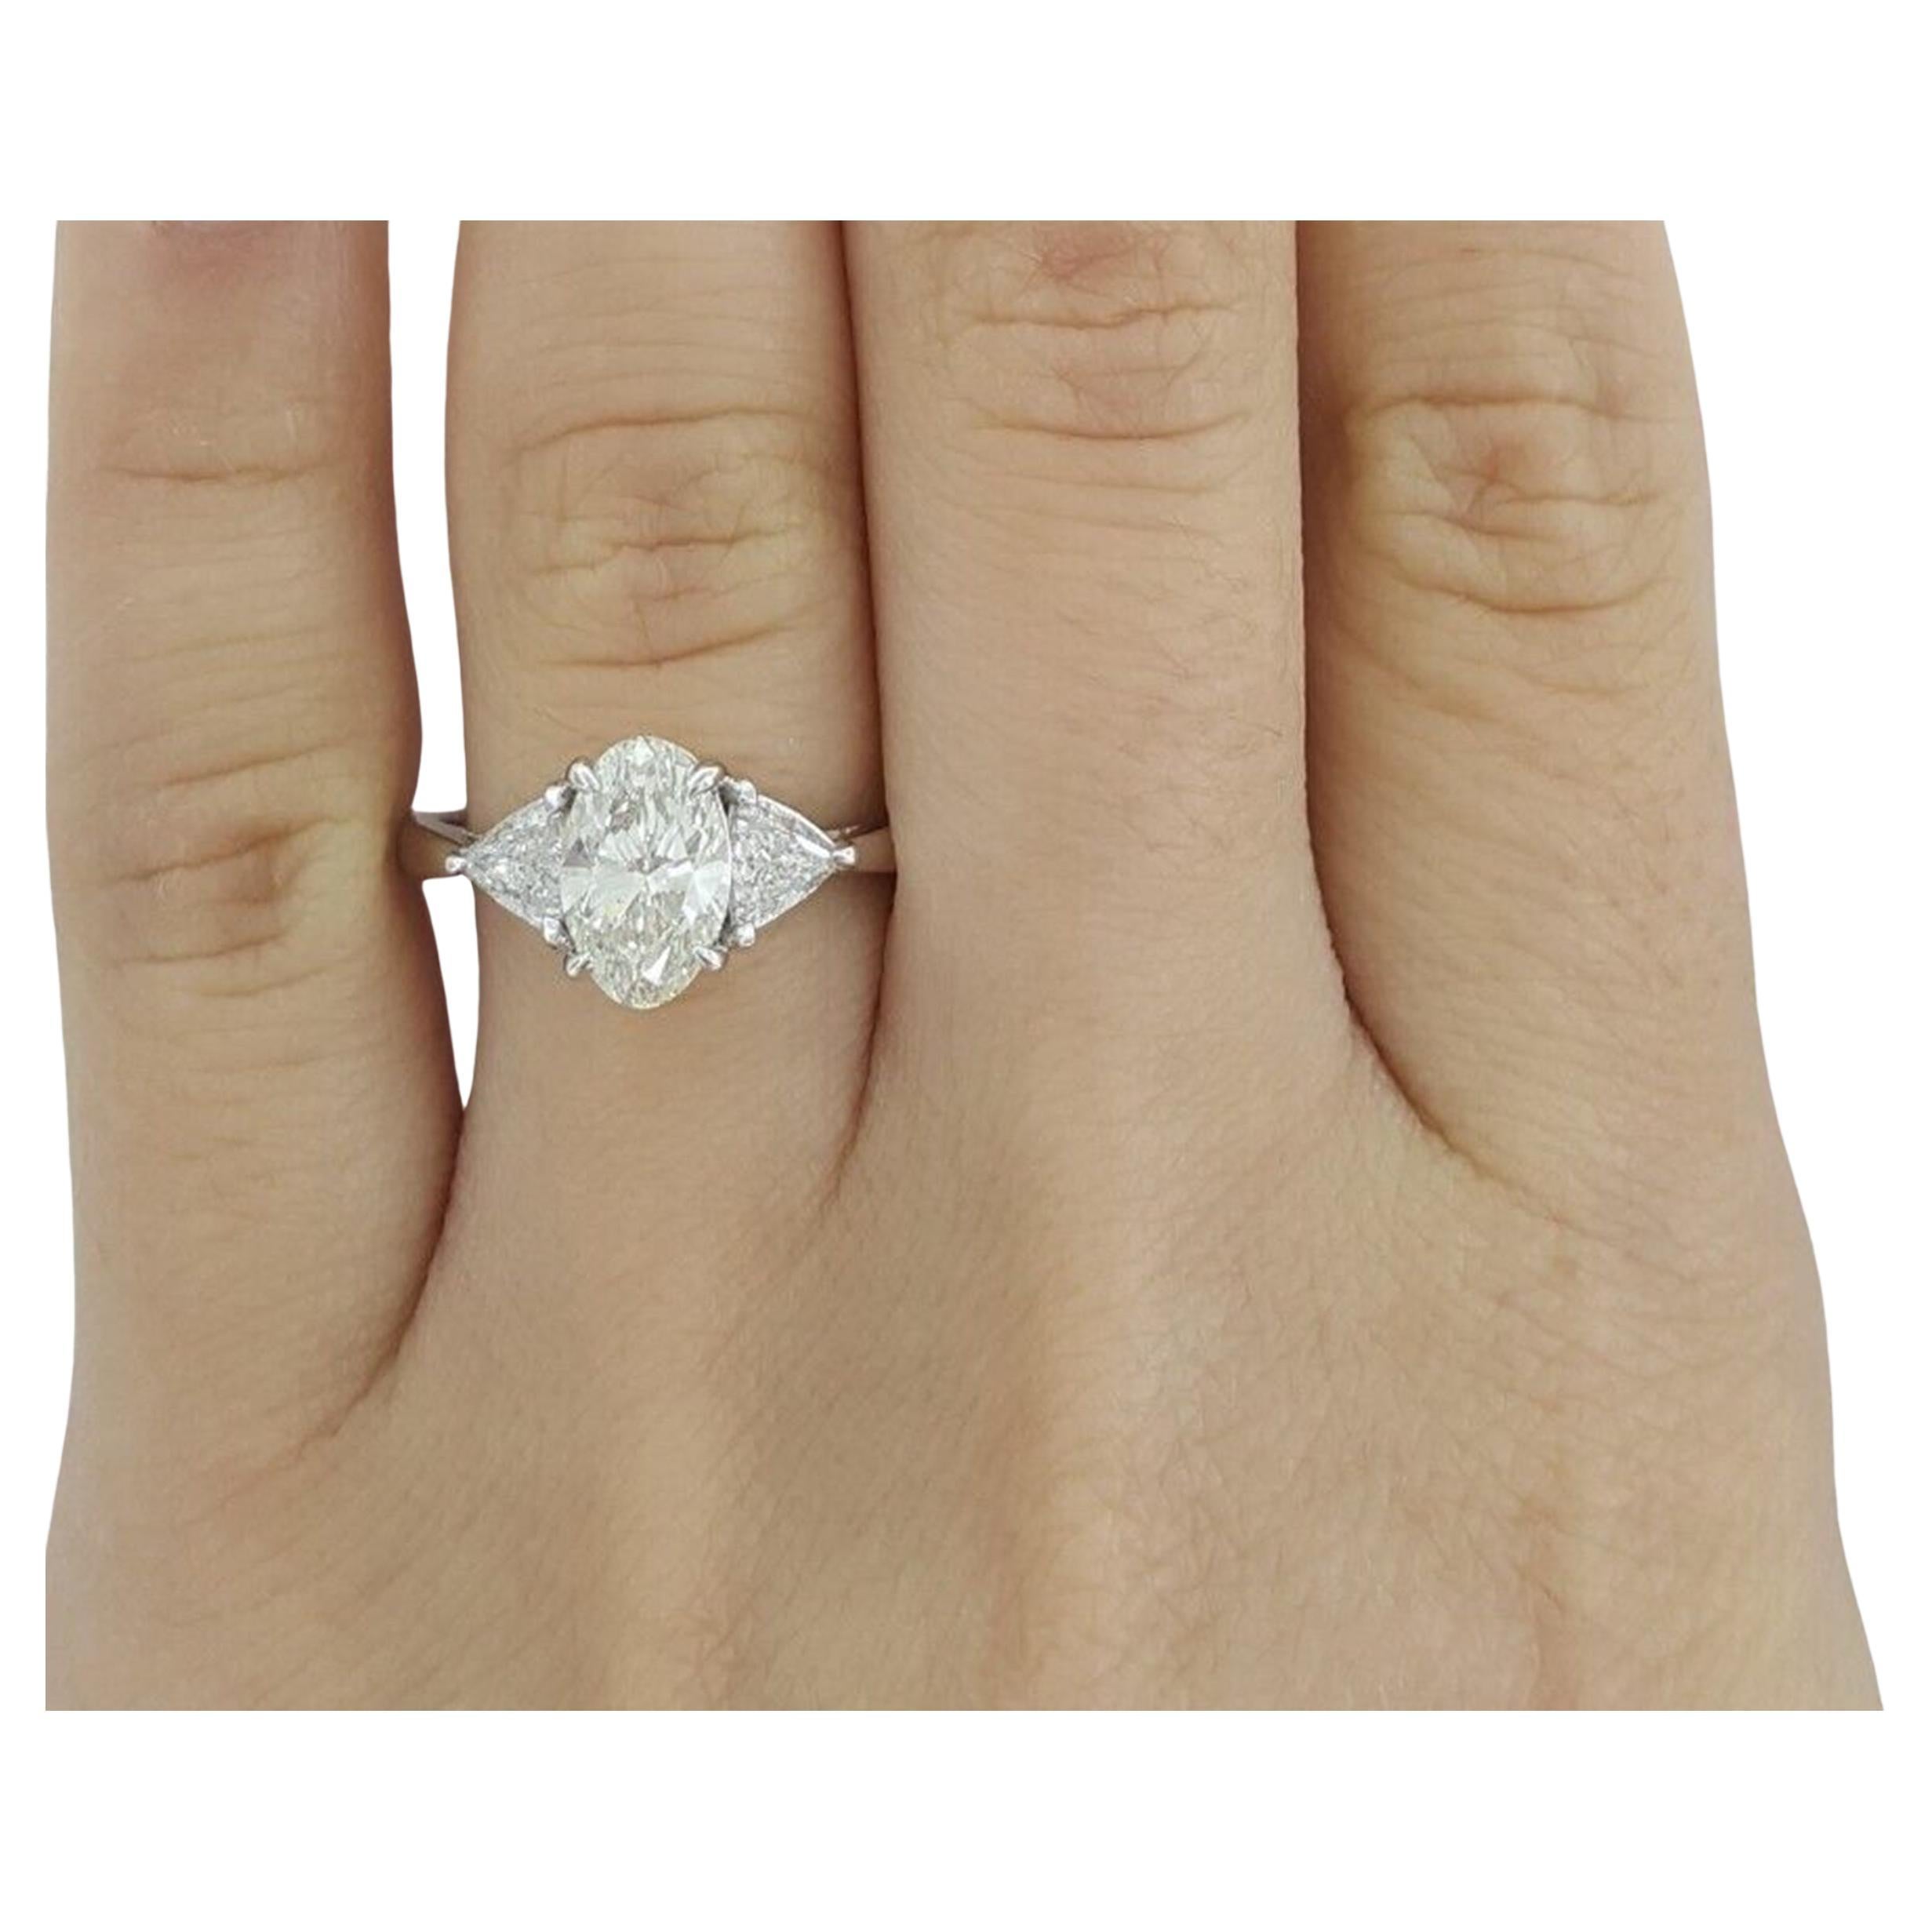 Oval Cut EGL Certified 1.83 Carat Pear Cut Diamond Ring For Sale